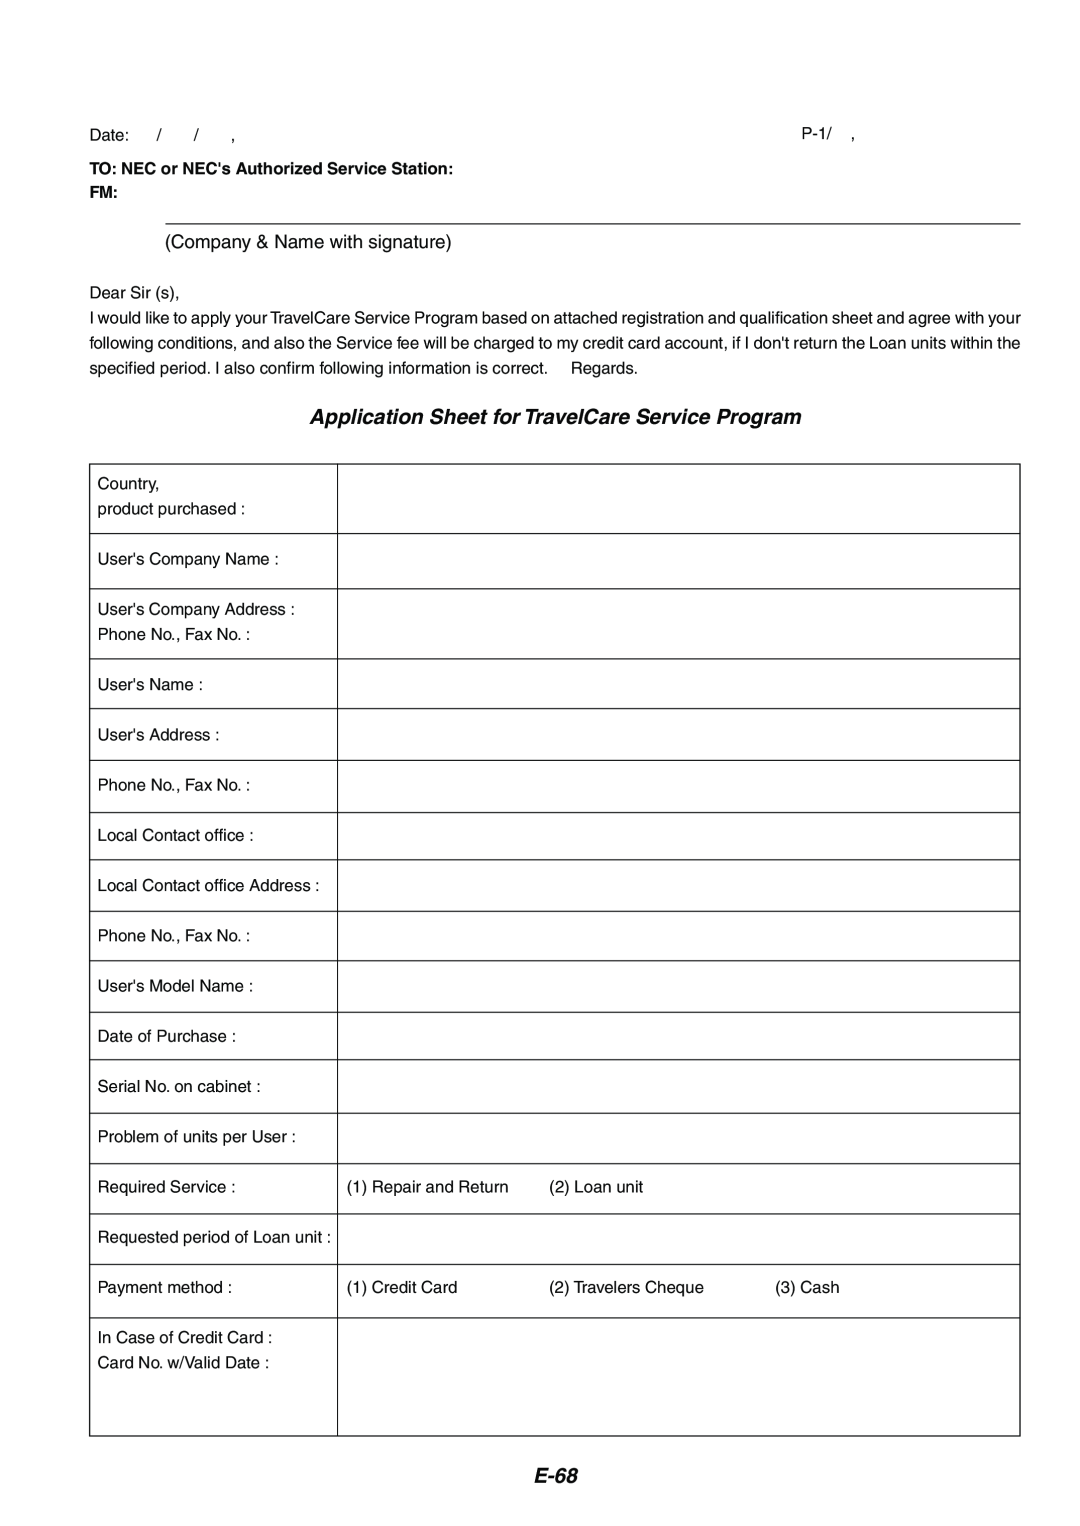 Kensington MT1075, MT1065 user manual Application Sheet for TravelCare Service Program, E-68, Company & Name with signature 